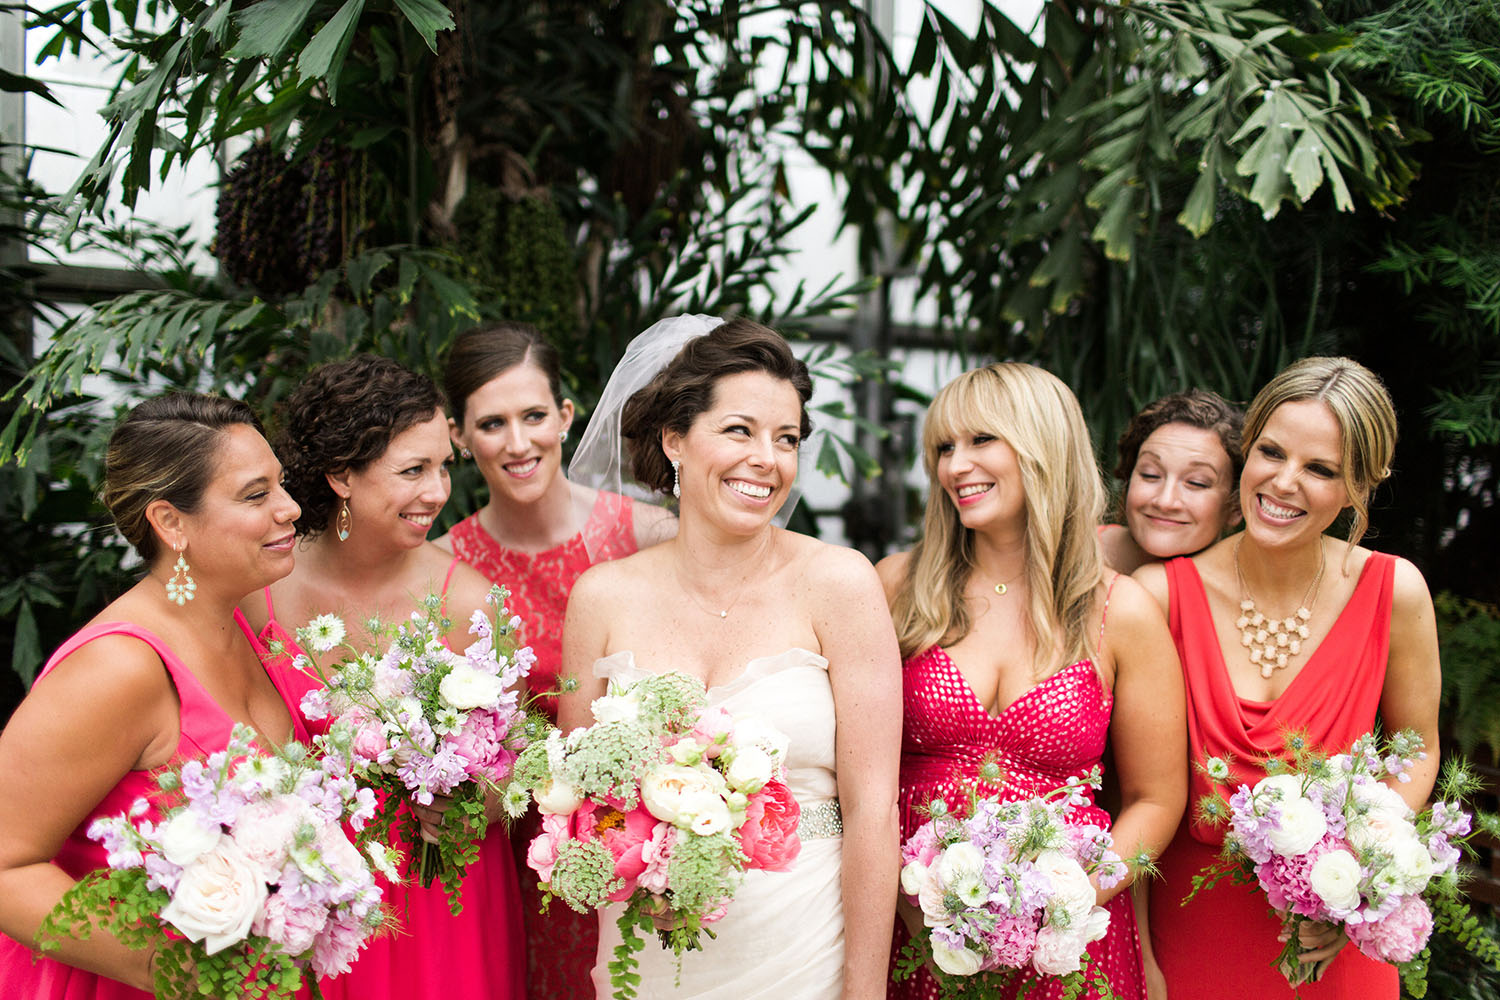   We Laugh We Love Photography &nbsp; | &nbsp;Wedding Reception &nbsp;| &nbsp;The Horticultural Center,&nbsp;Philadelphia, PA 